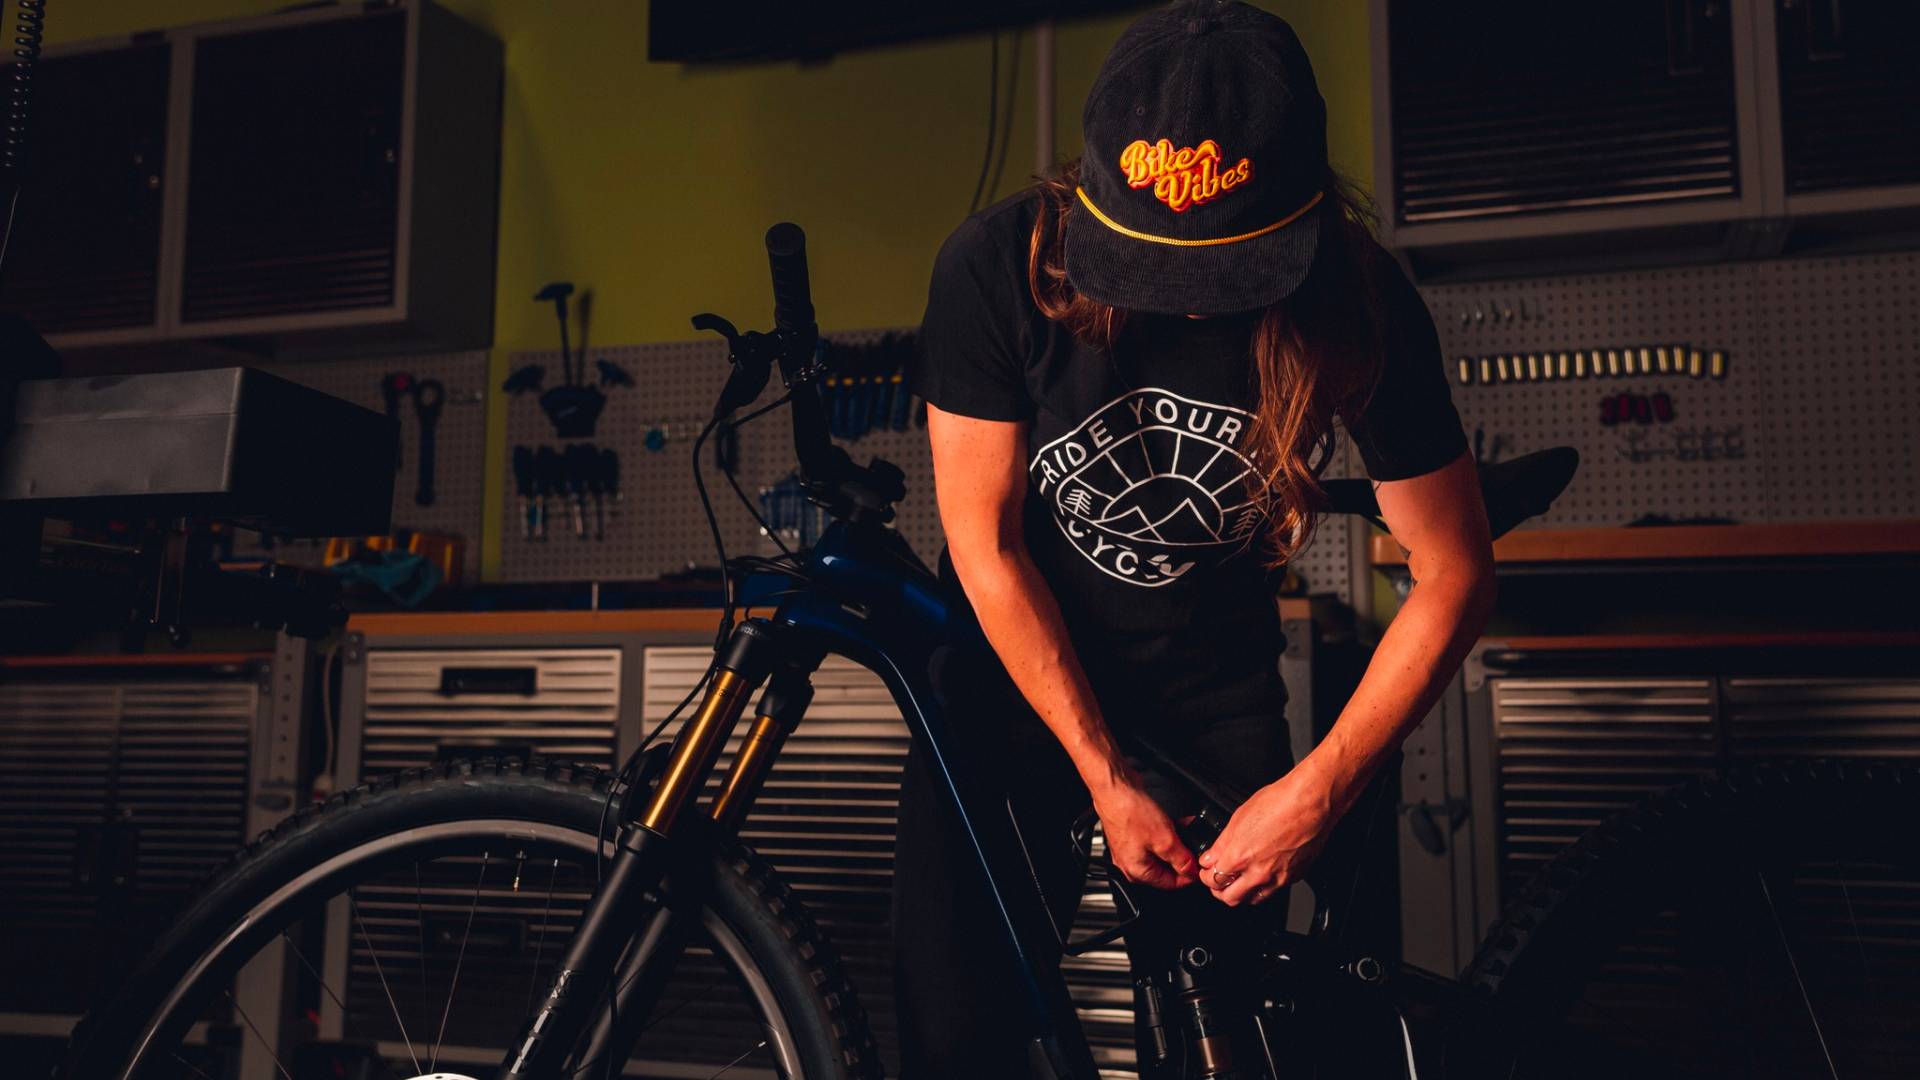 Bicycle Warehouse - America's best bike shop